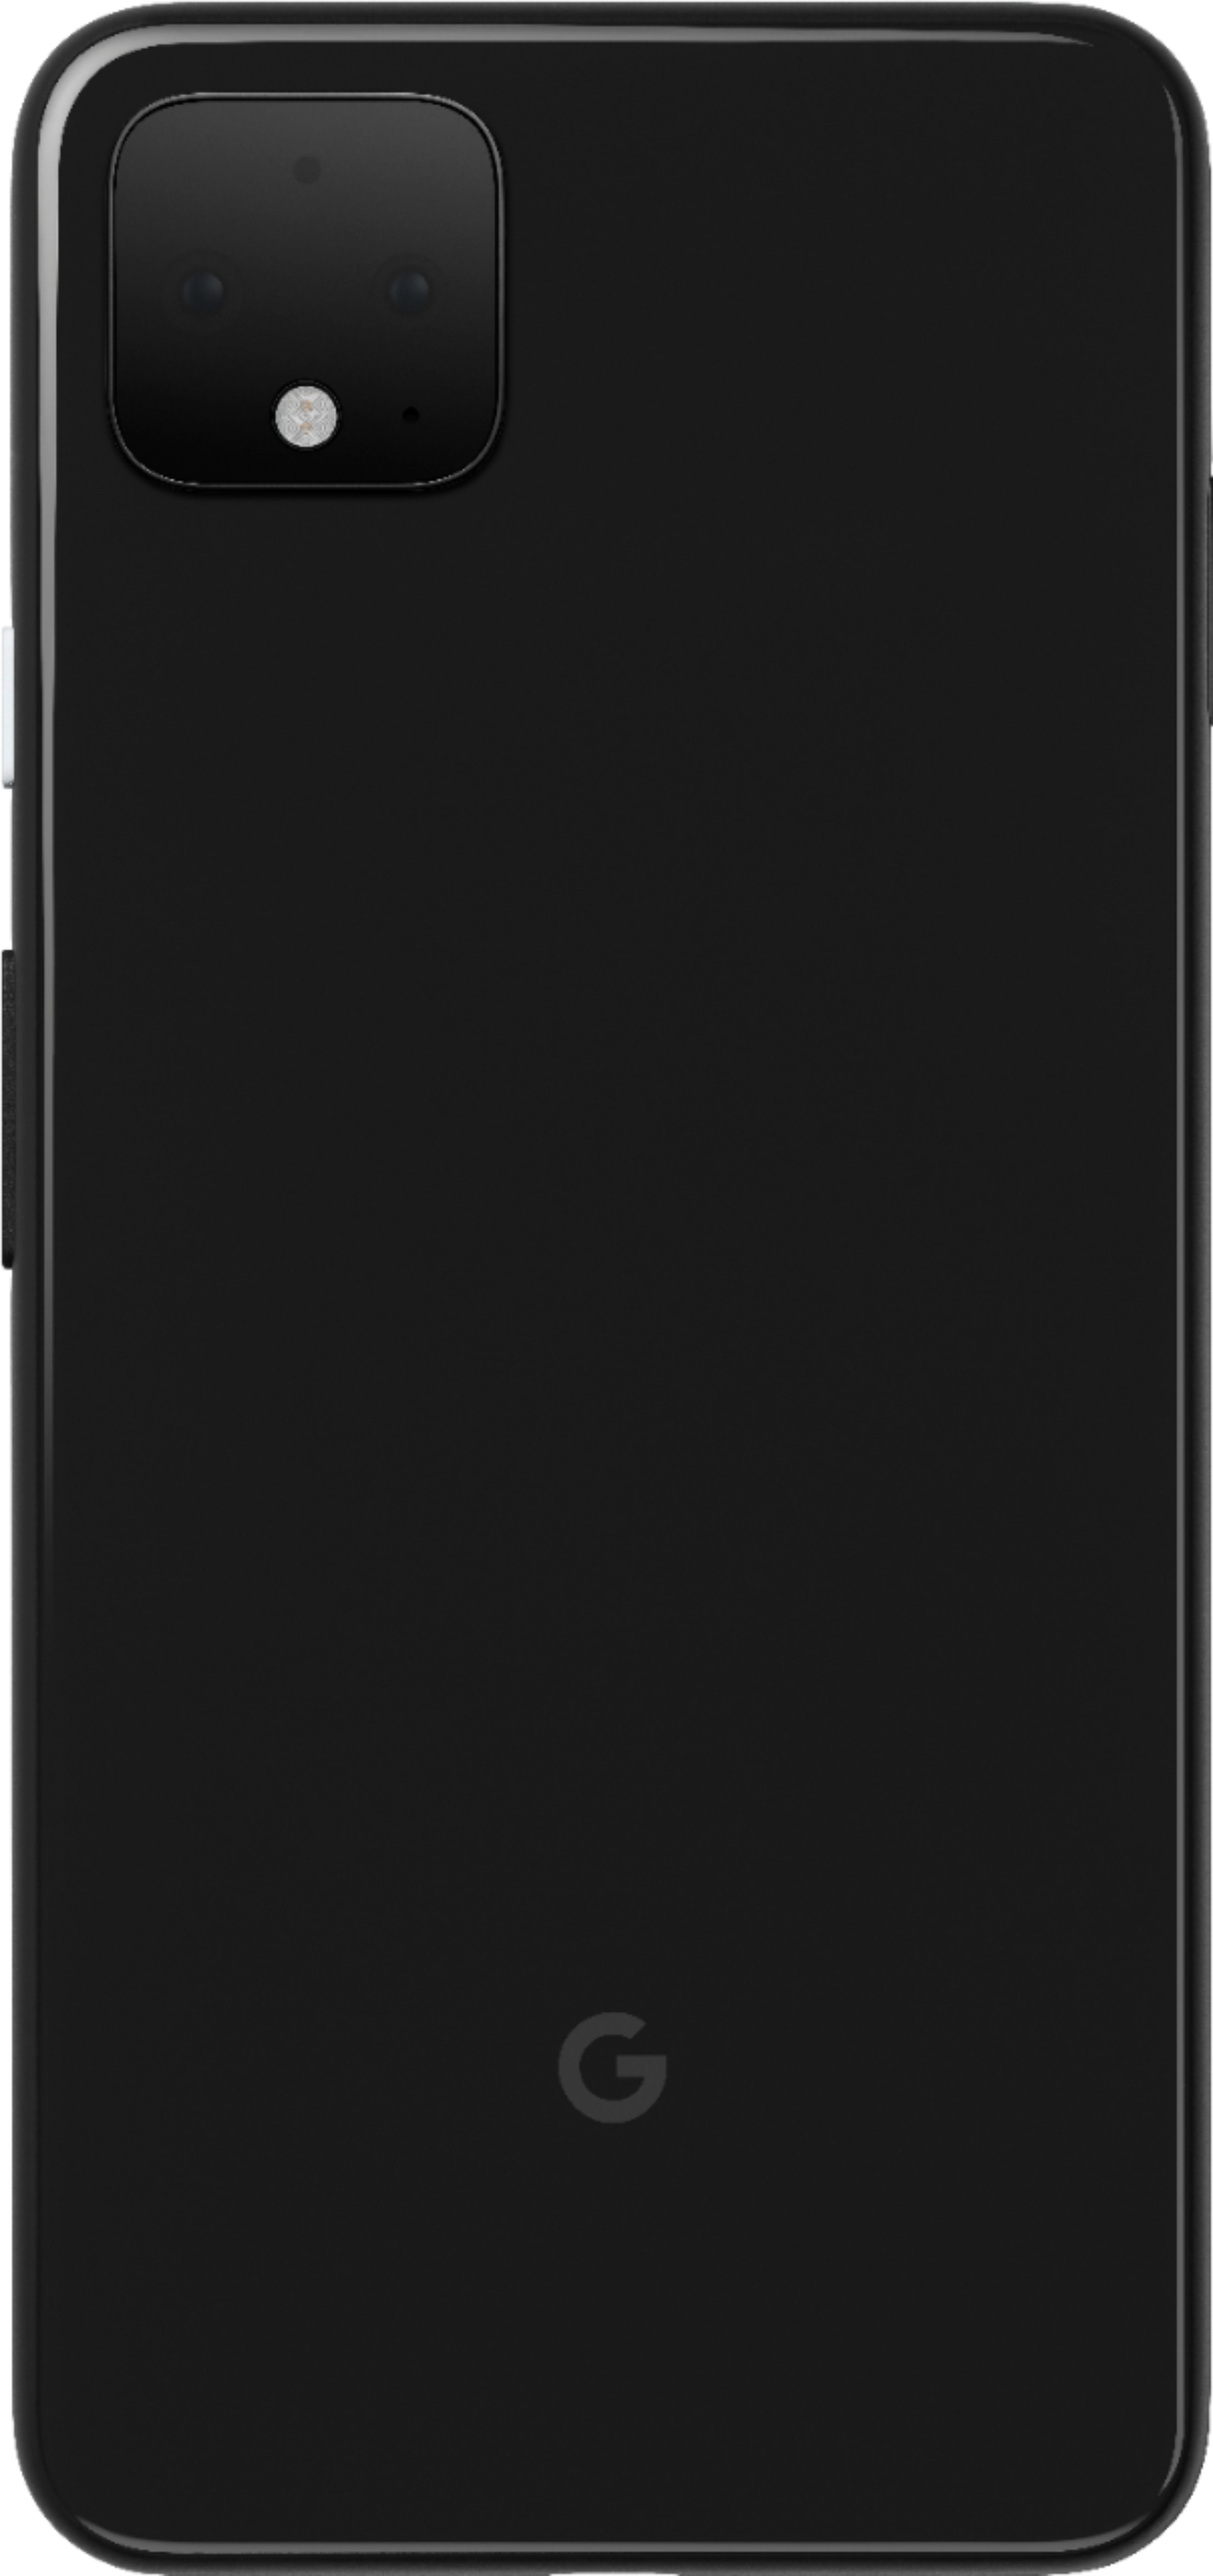 Google Pixel 4 XL 64GB（黒）本体-